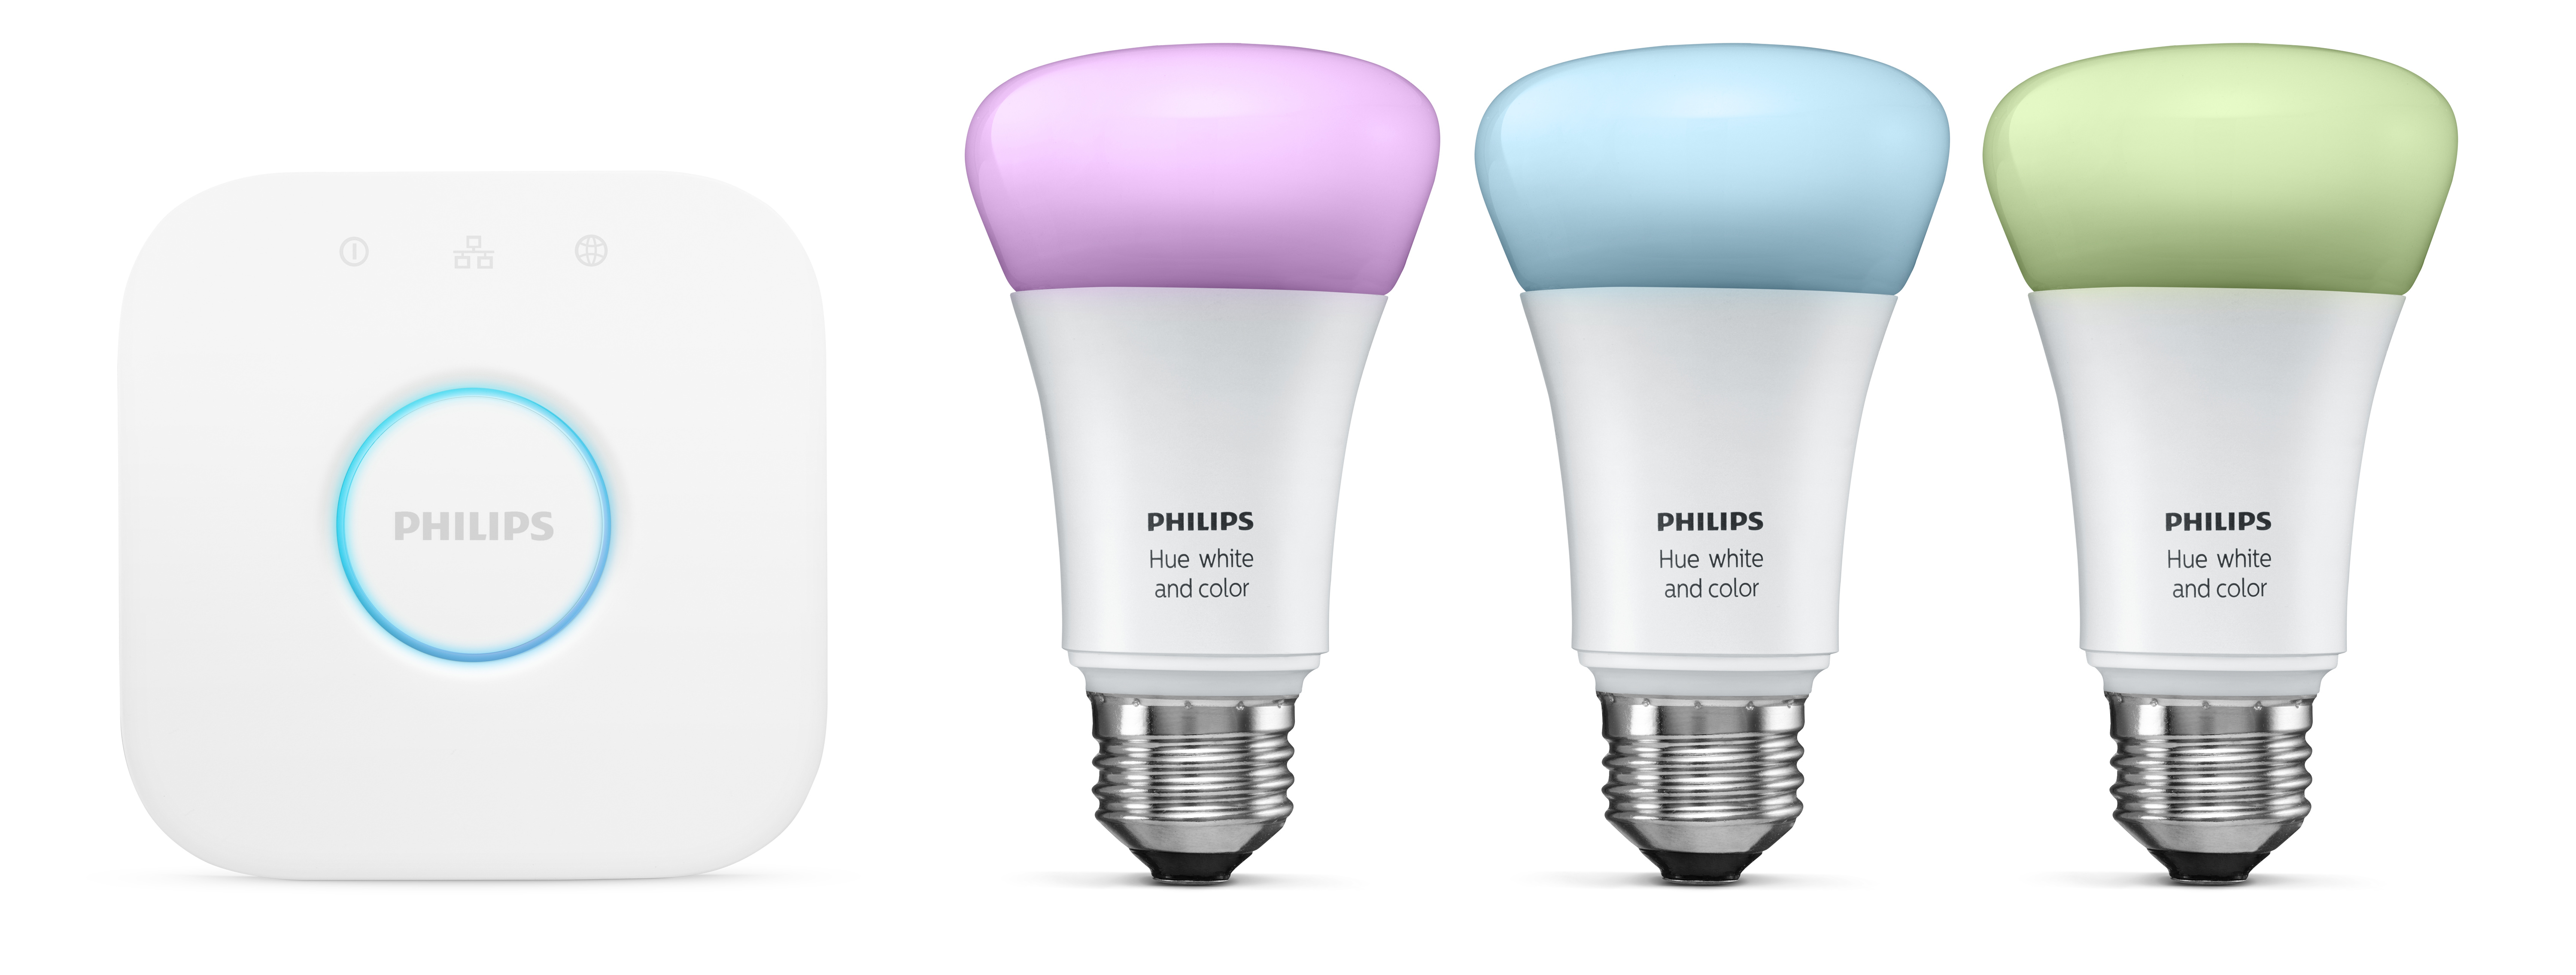 Включи максимальное есть. Лампа светодиодная Philips Hue White and Color, e26, a19, 10вт. Philips Hue White and Color ambiance a19 Starter Kit. Philips светодиодные лампы Color. Philips Hue Bloom.